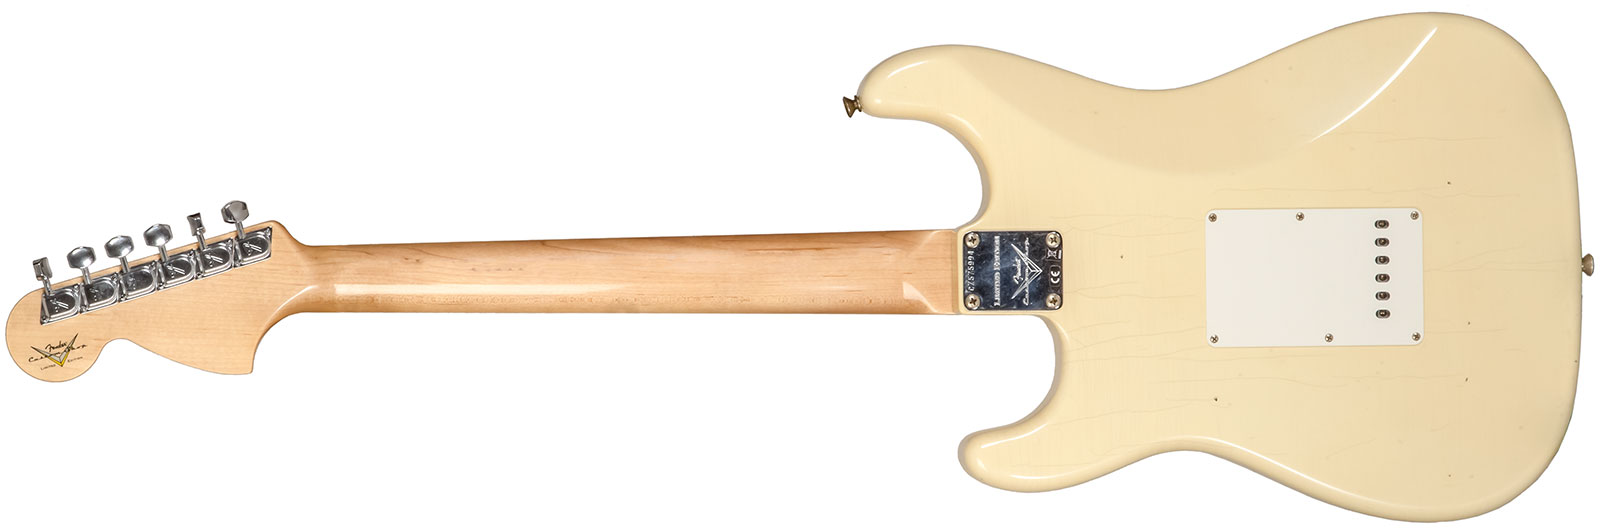 Fender Custom Shop Strat 1969 3s Trem Mn #cz576216 - Journeyman Relic Aged Vintage White - Guitare Électrique Forme Str - Variation 1